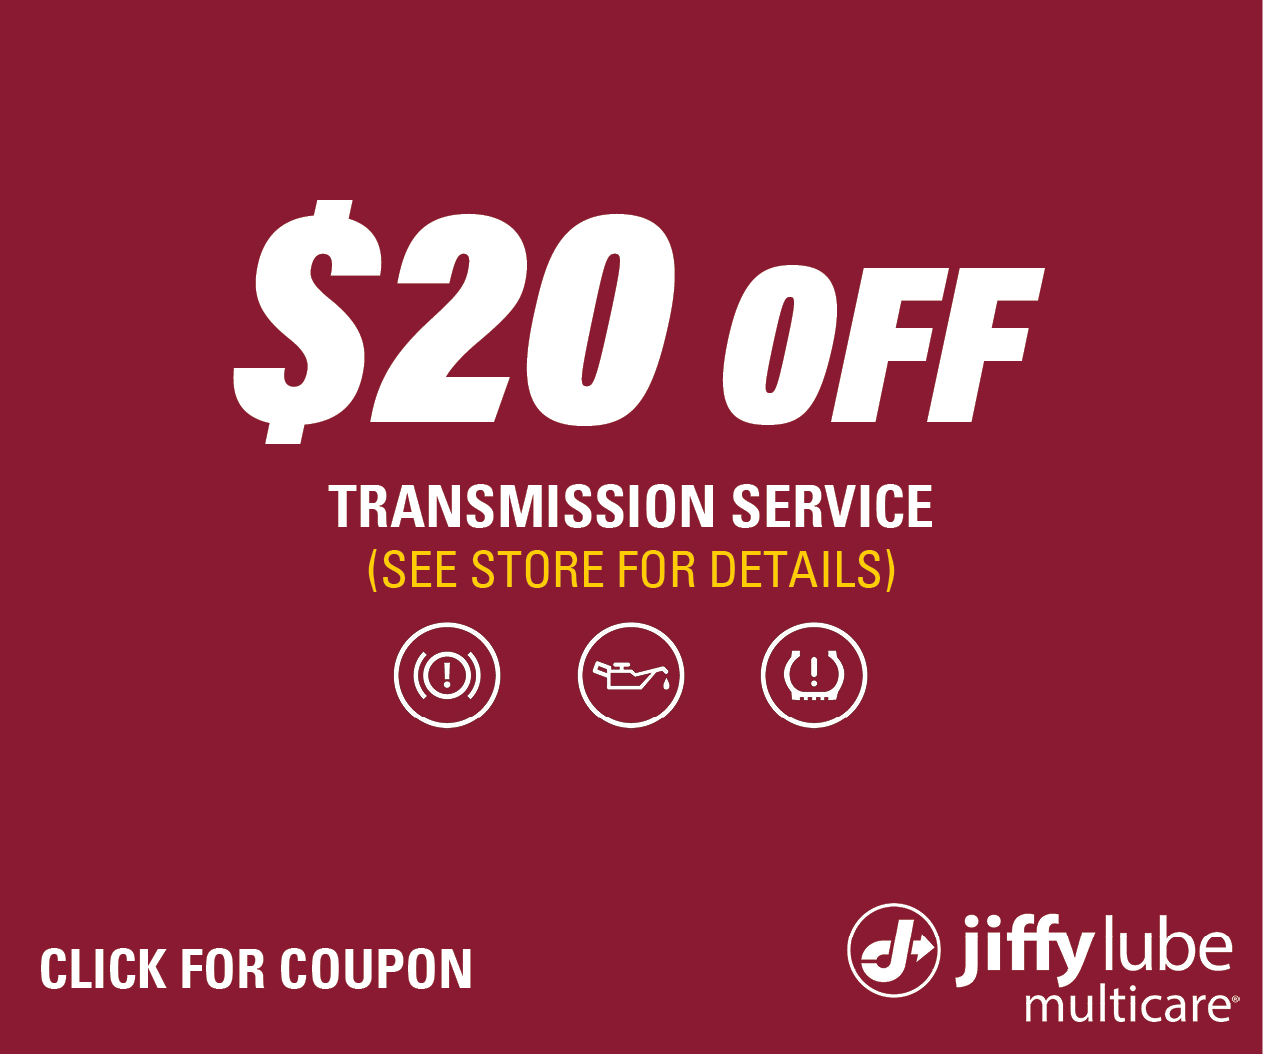 $20 OFF Transmission Service Website Image (Bronco Lube)